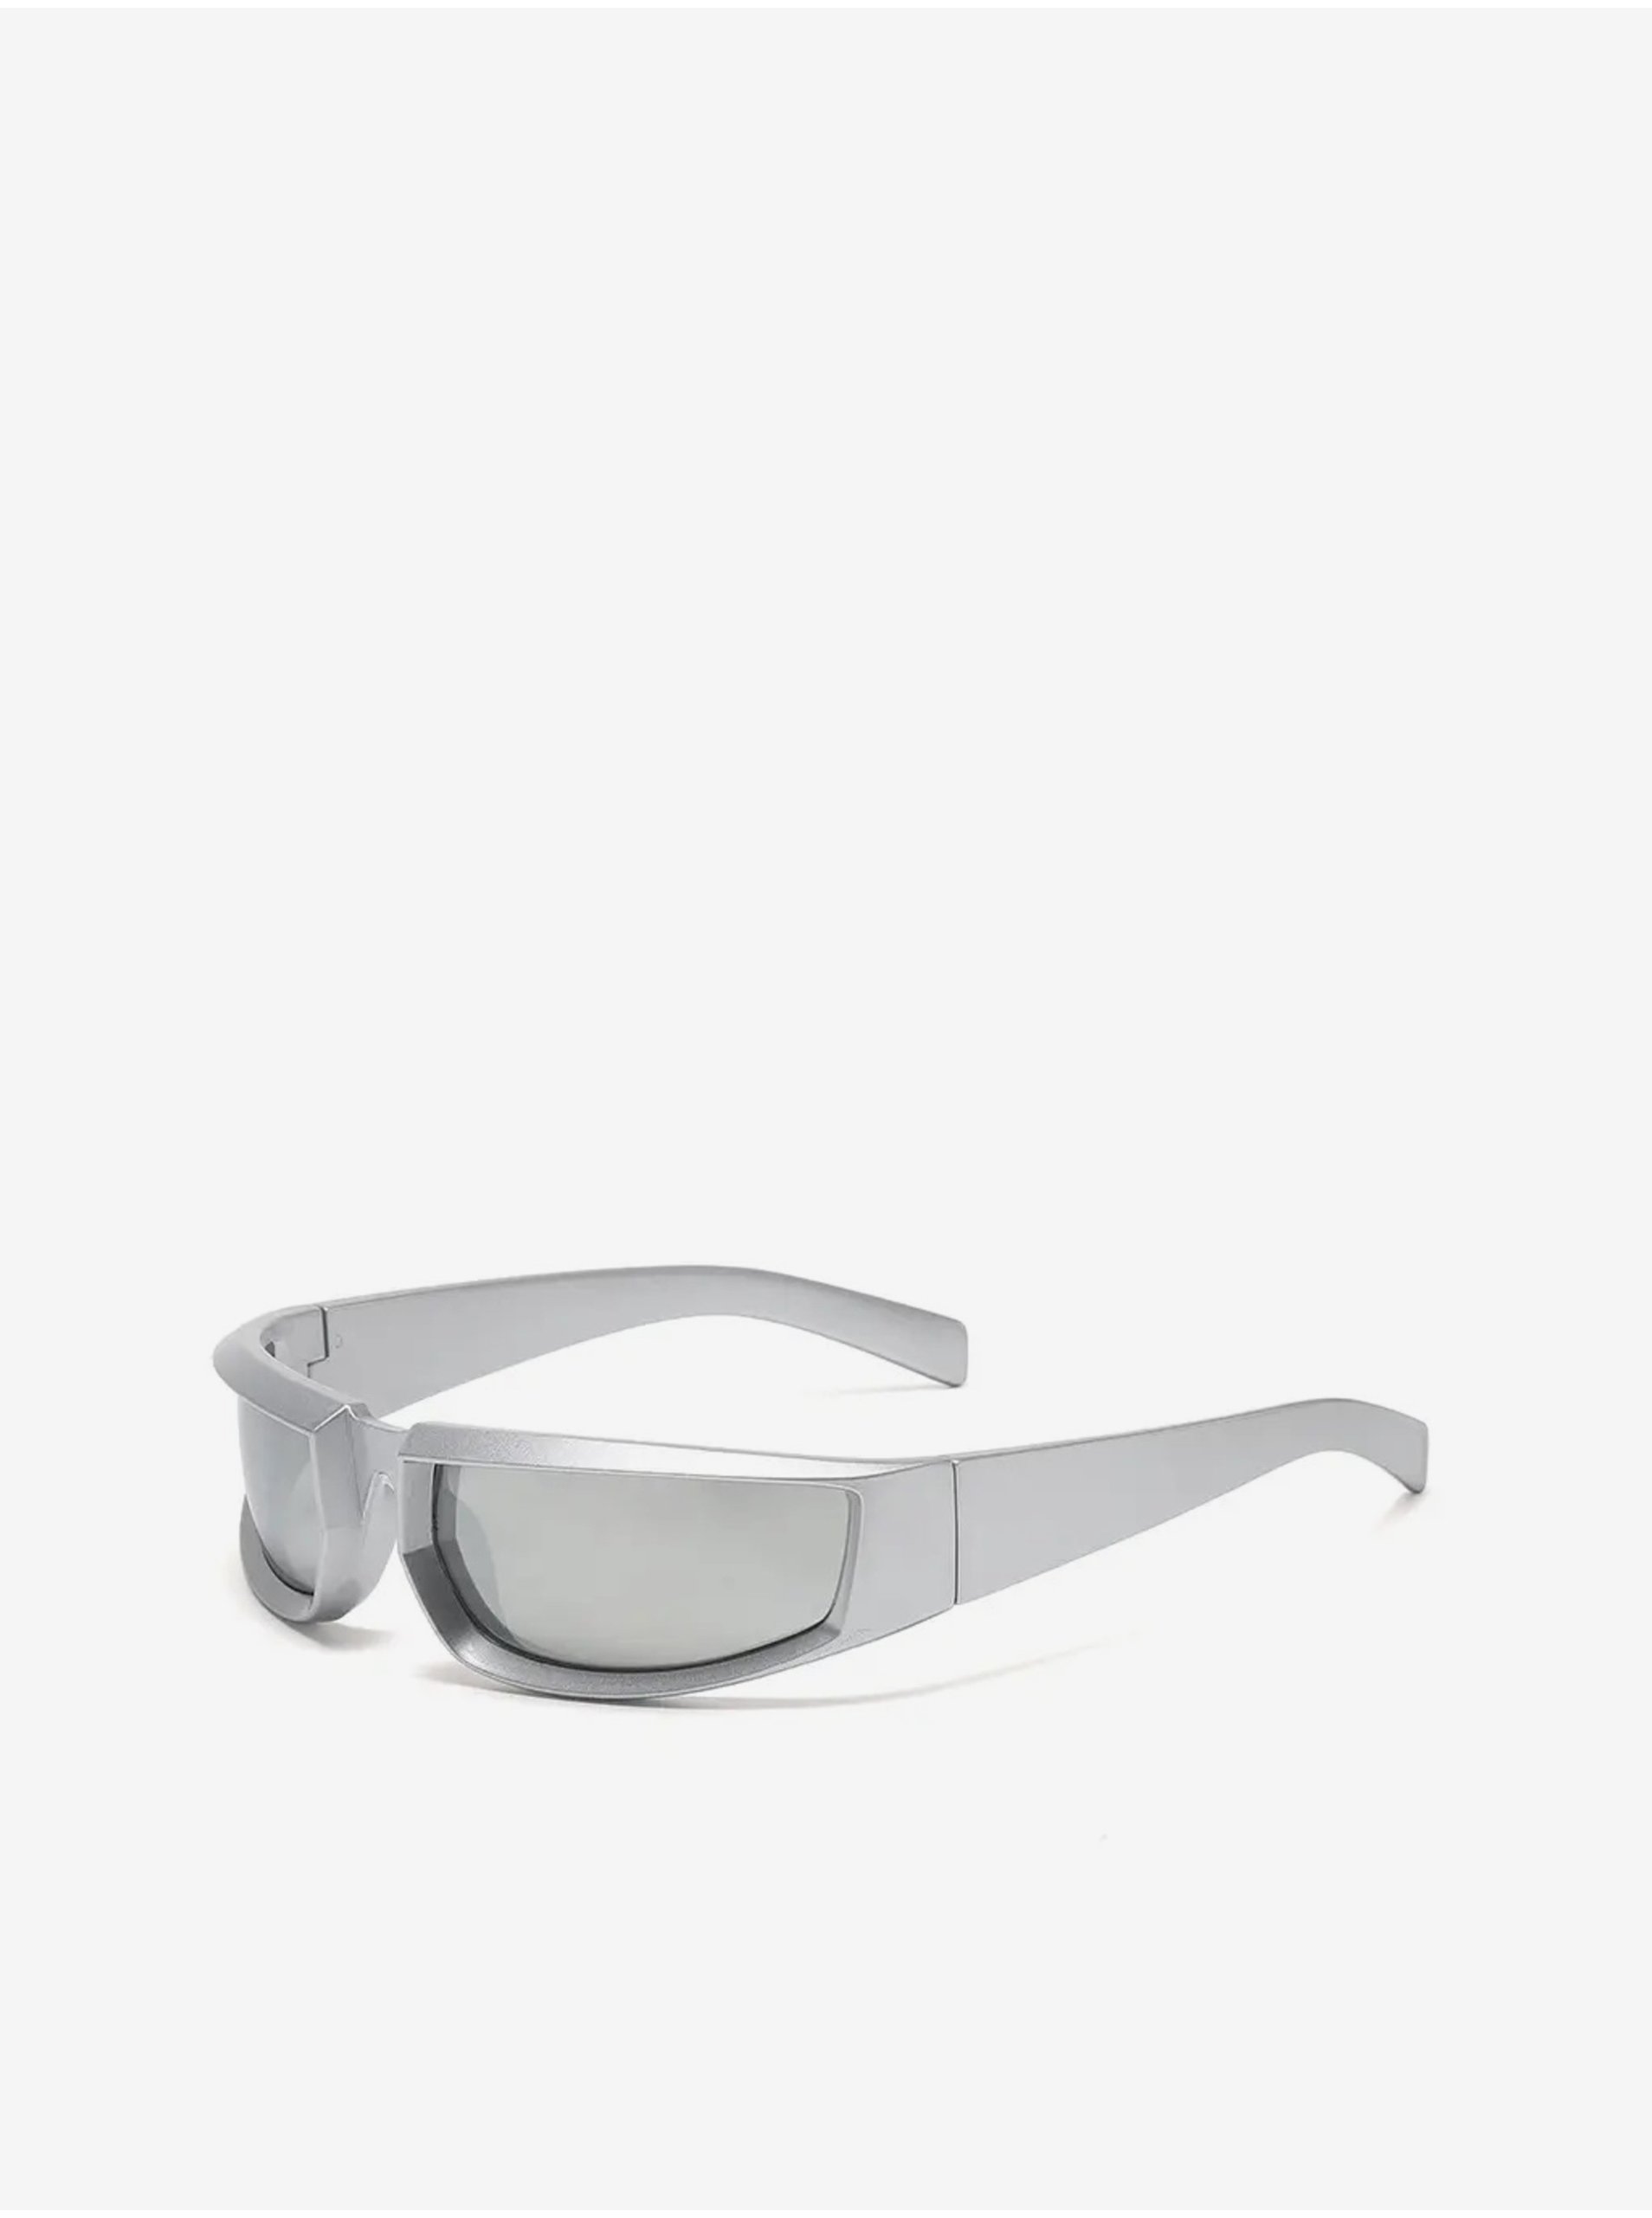 Lacno Biele unisex športové slnečné okuliare VeyRey Steampunk Istephiel